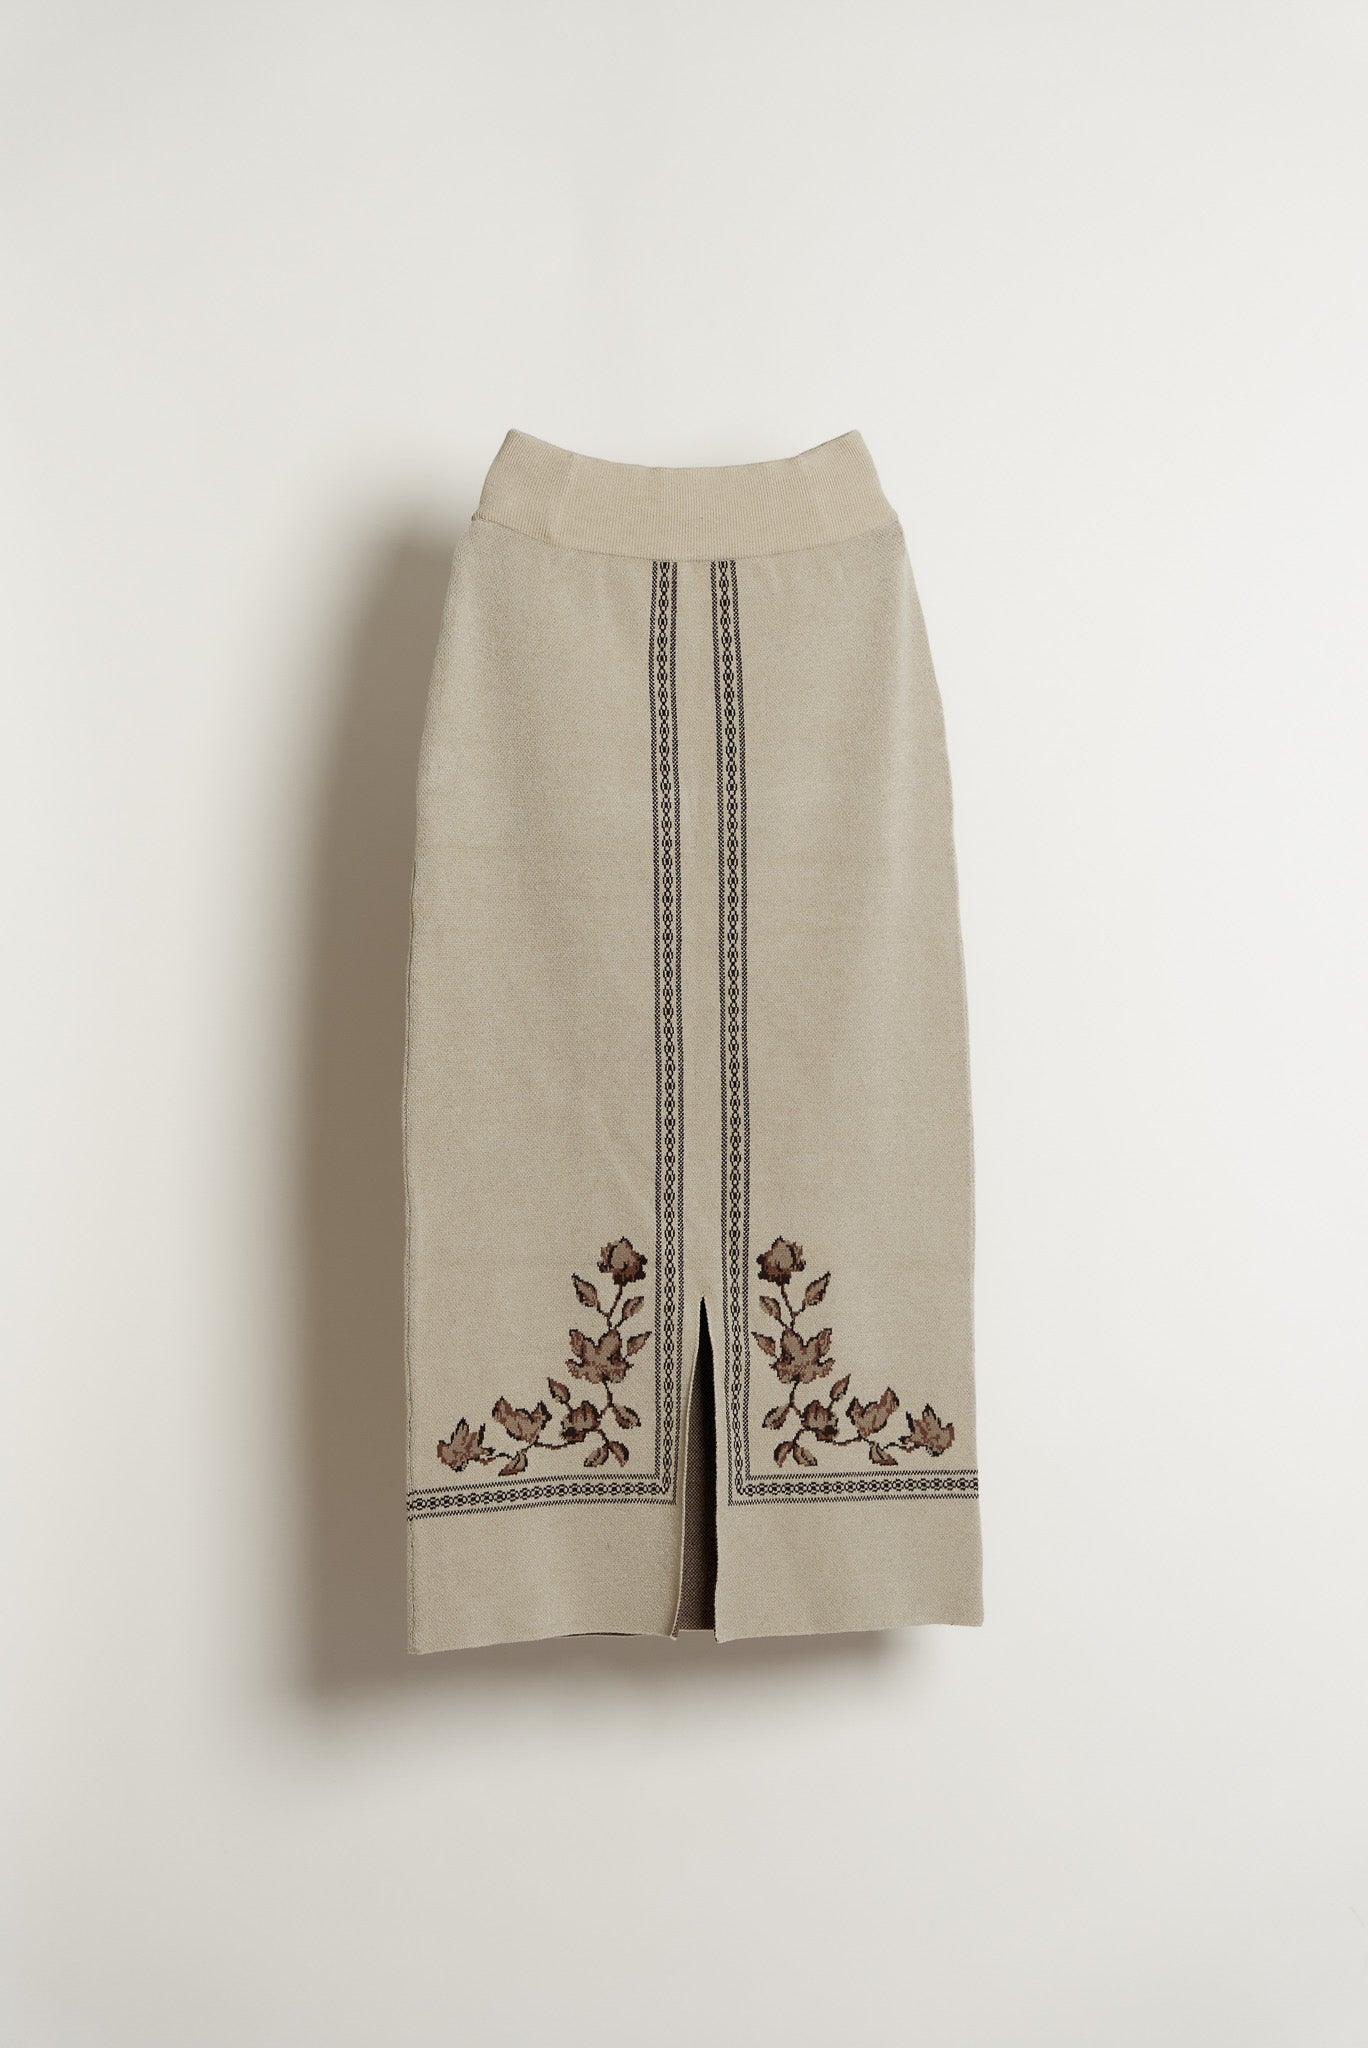 Eaphi / scarf motif knit skirt / beige実物のお写真見てみたいです